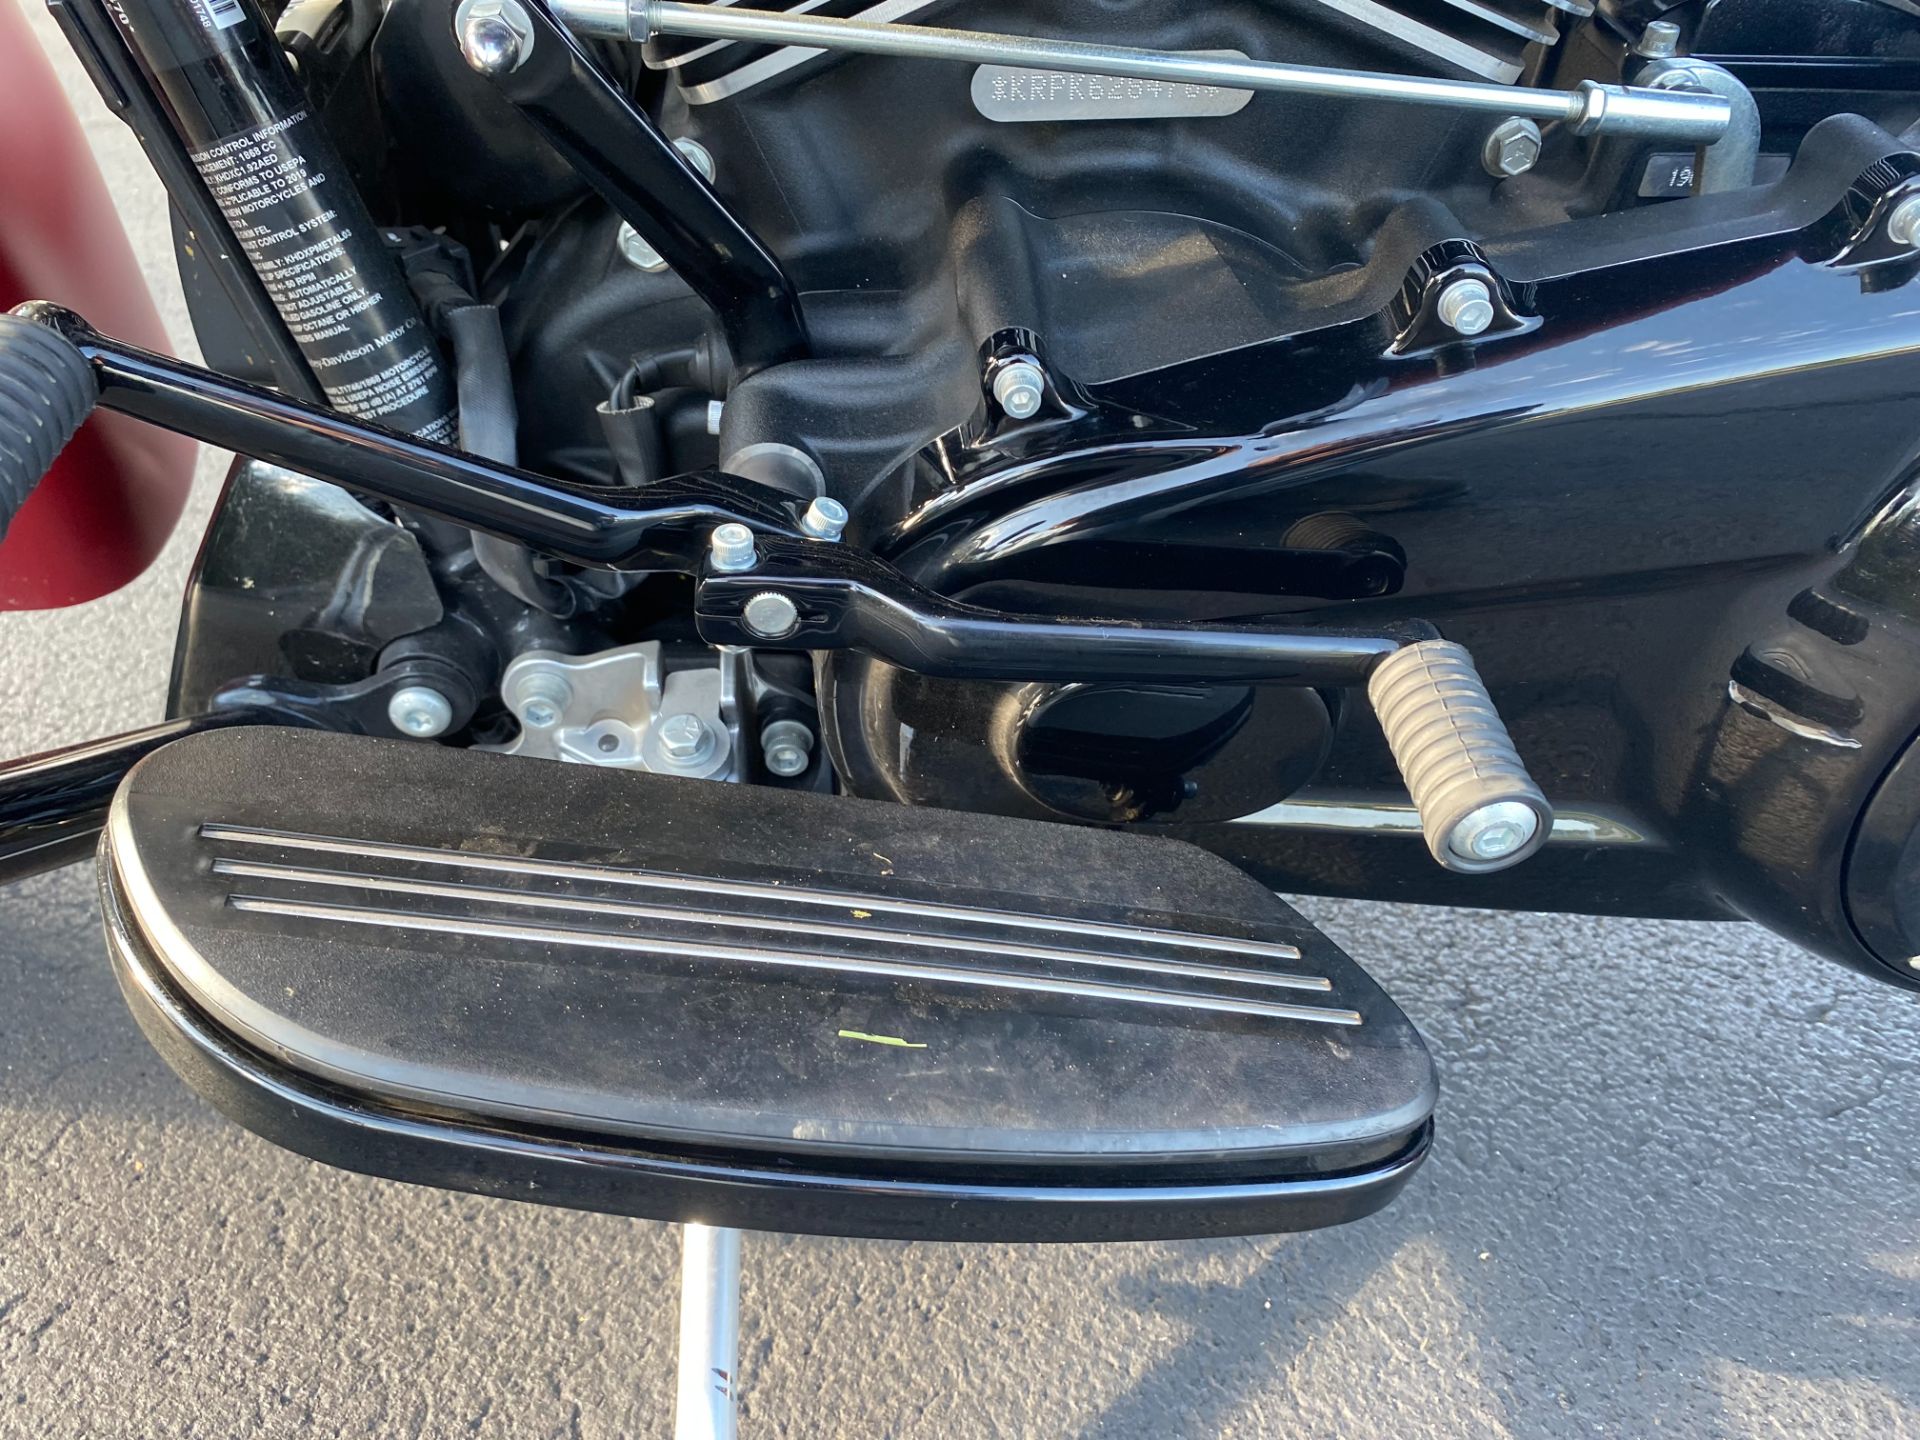 2019 Harley-Davidson Street Glide® Special in Lynchburg, Virginia - Photo 18